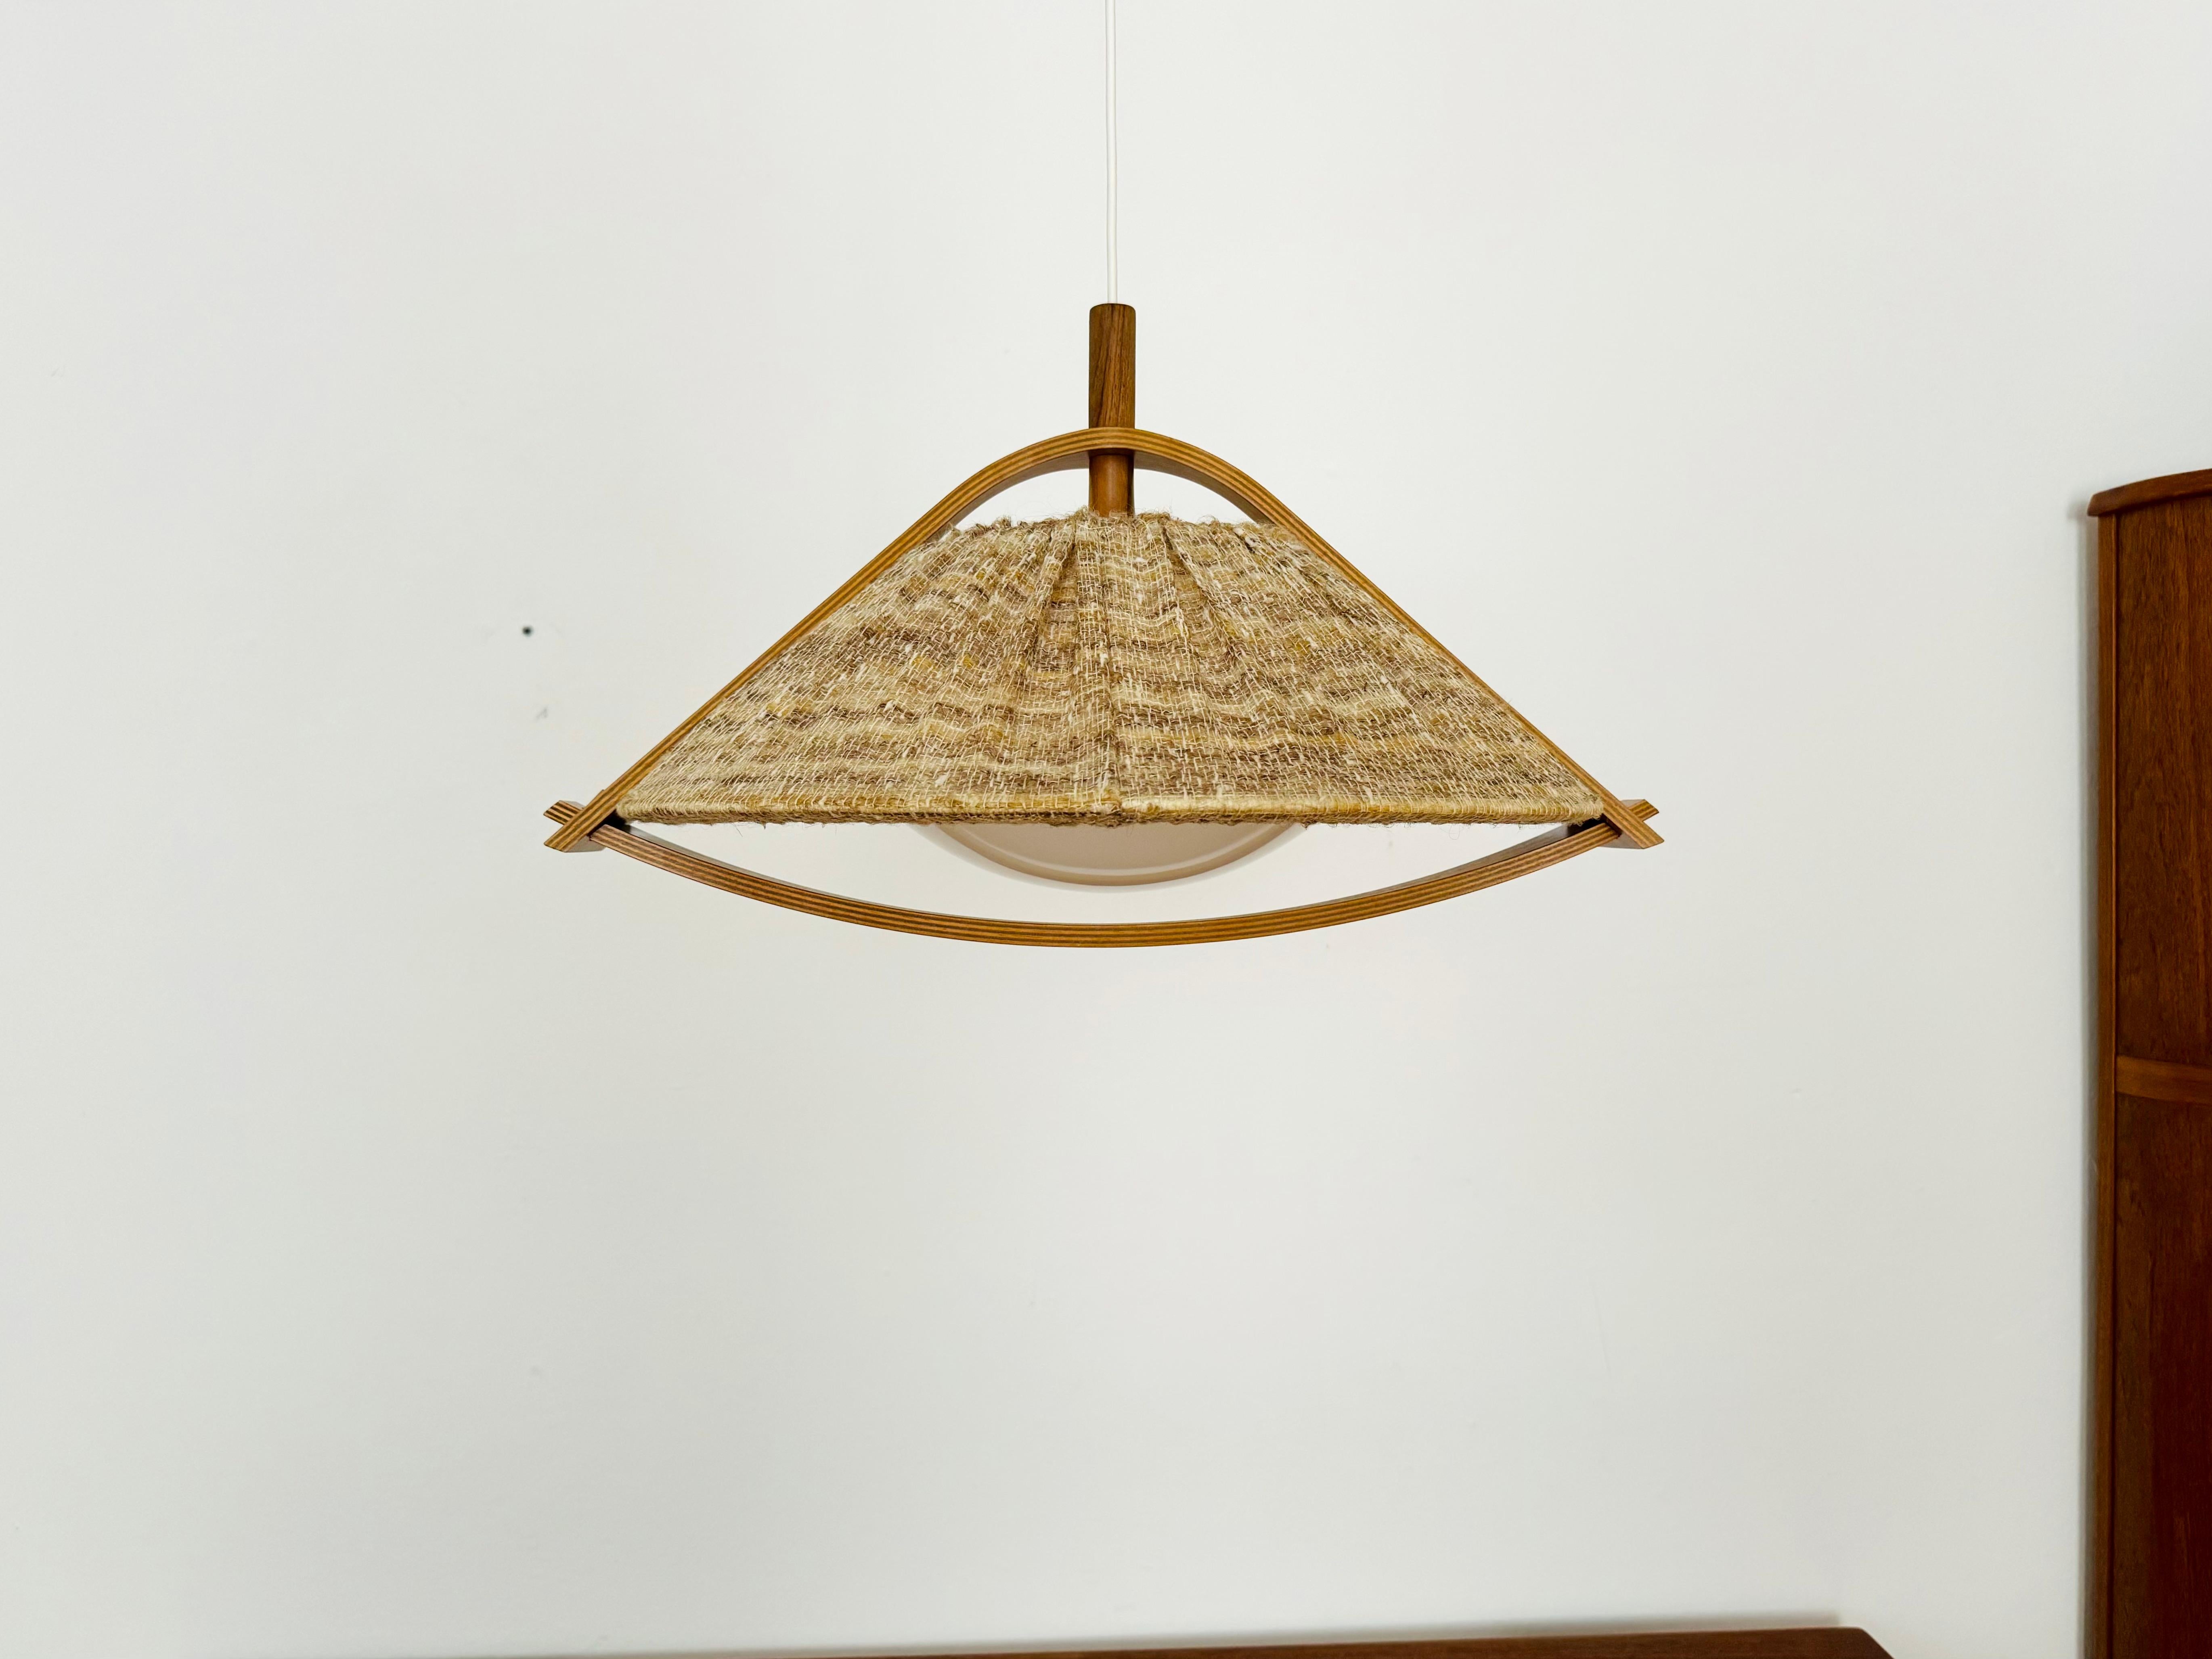 Walnut Pendant Lamp by Temde In Good Condition For Sale In München, DE